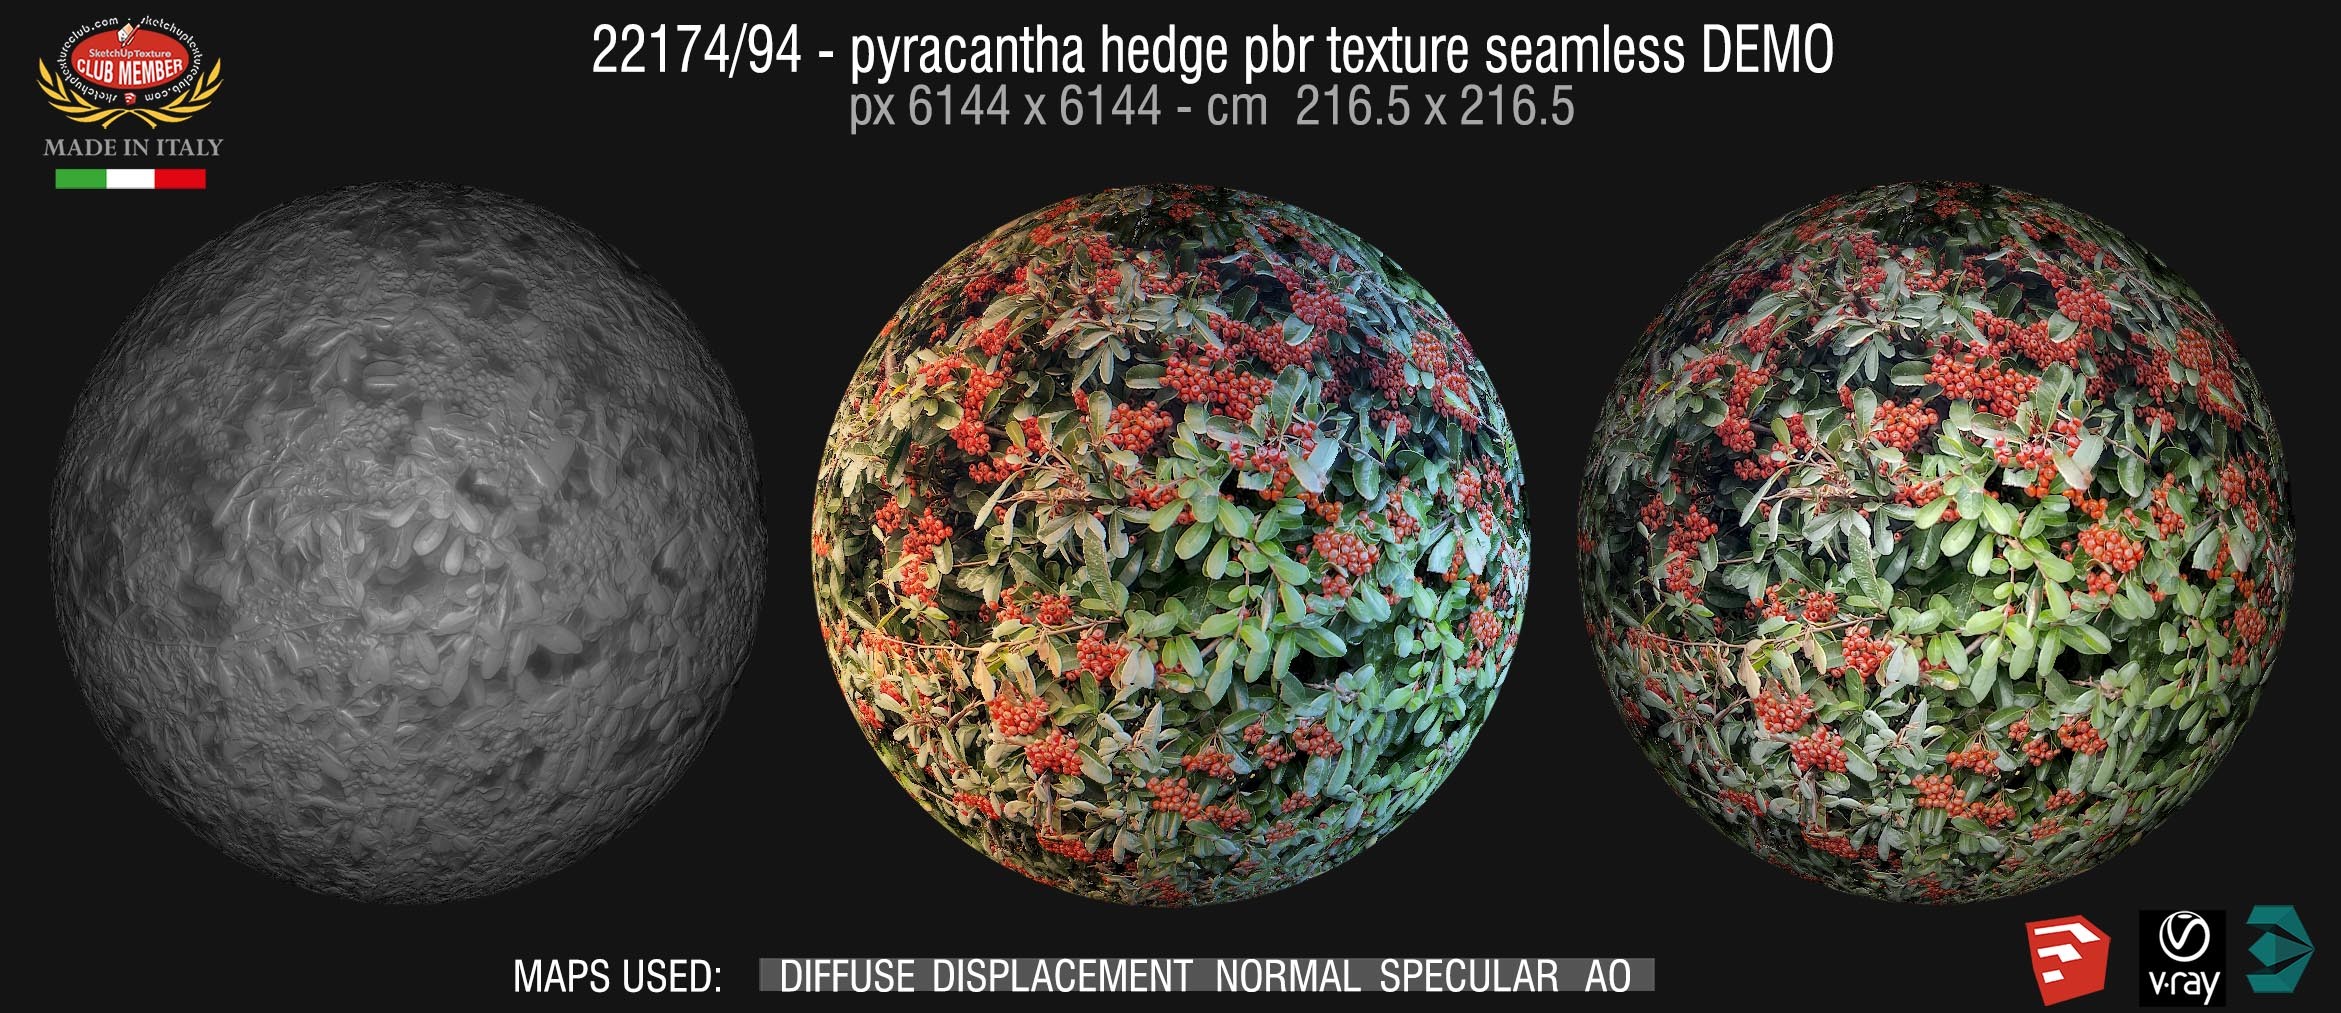 22174/94 pyracantha hedge PBR texture-seamless demo